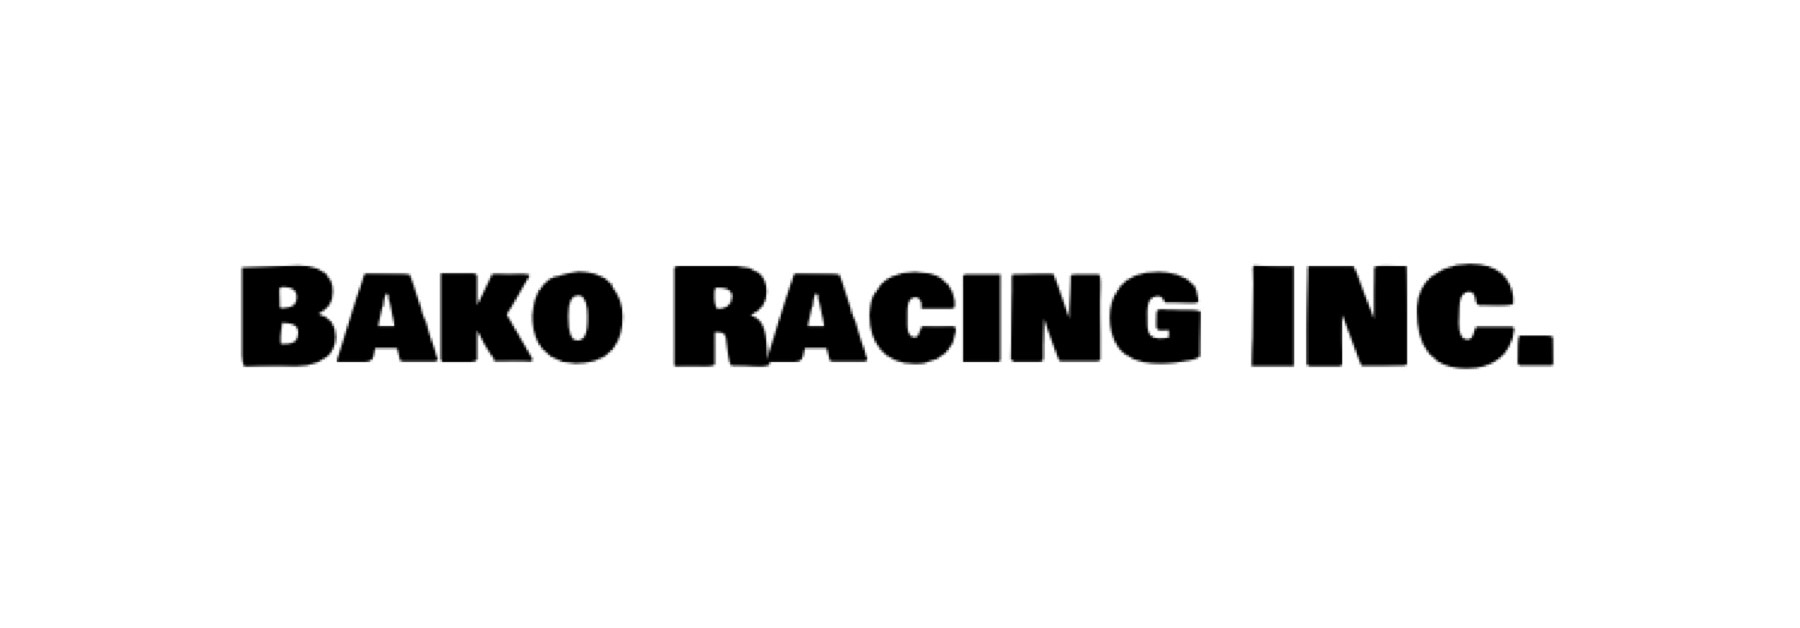 Bako Racing INC.